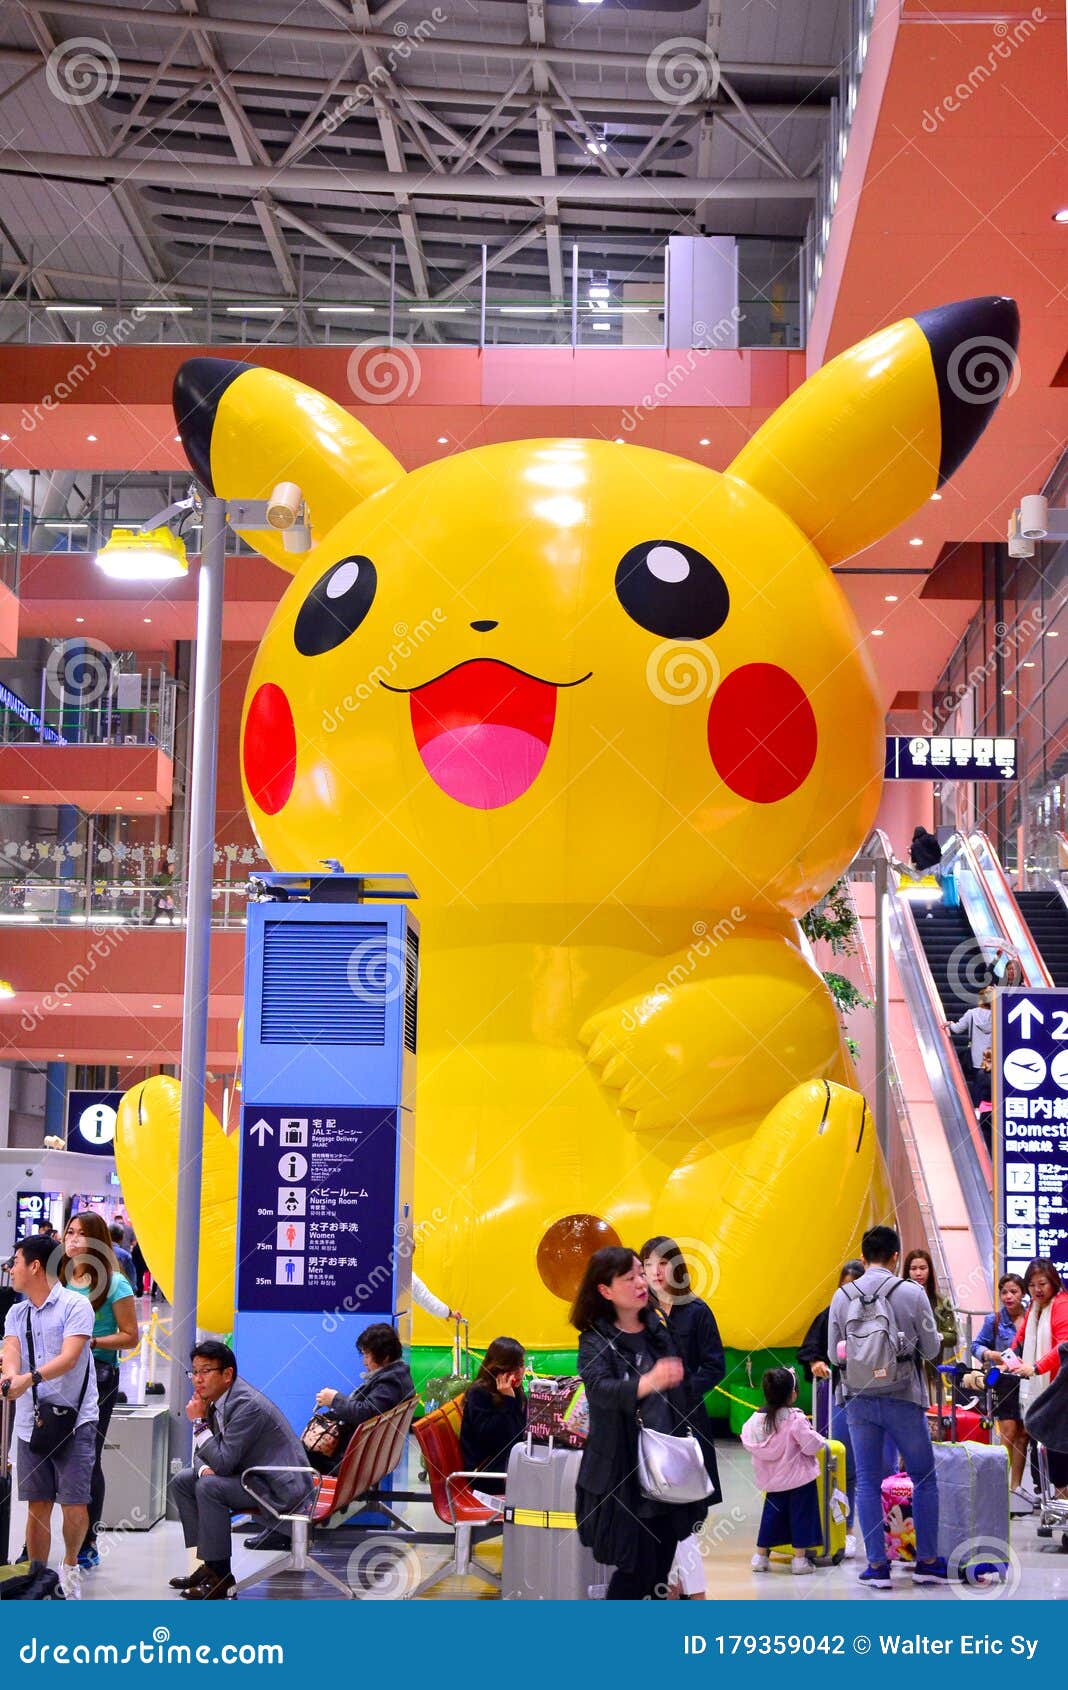 Pikachu Of Pokemon Big Figure At Kansai International Airport Interior In Osaka Japan Editorial Photography Image Of Osaka Book